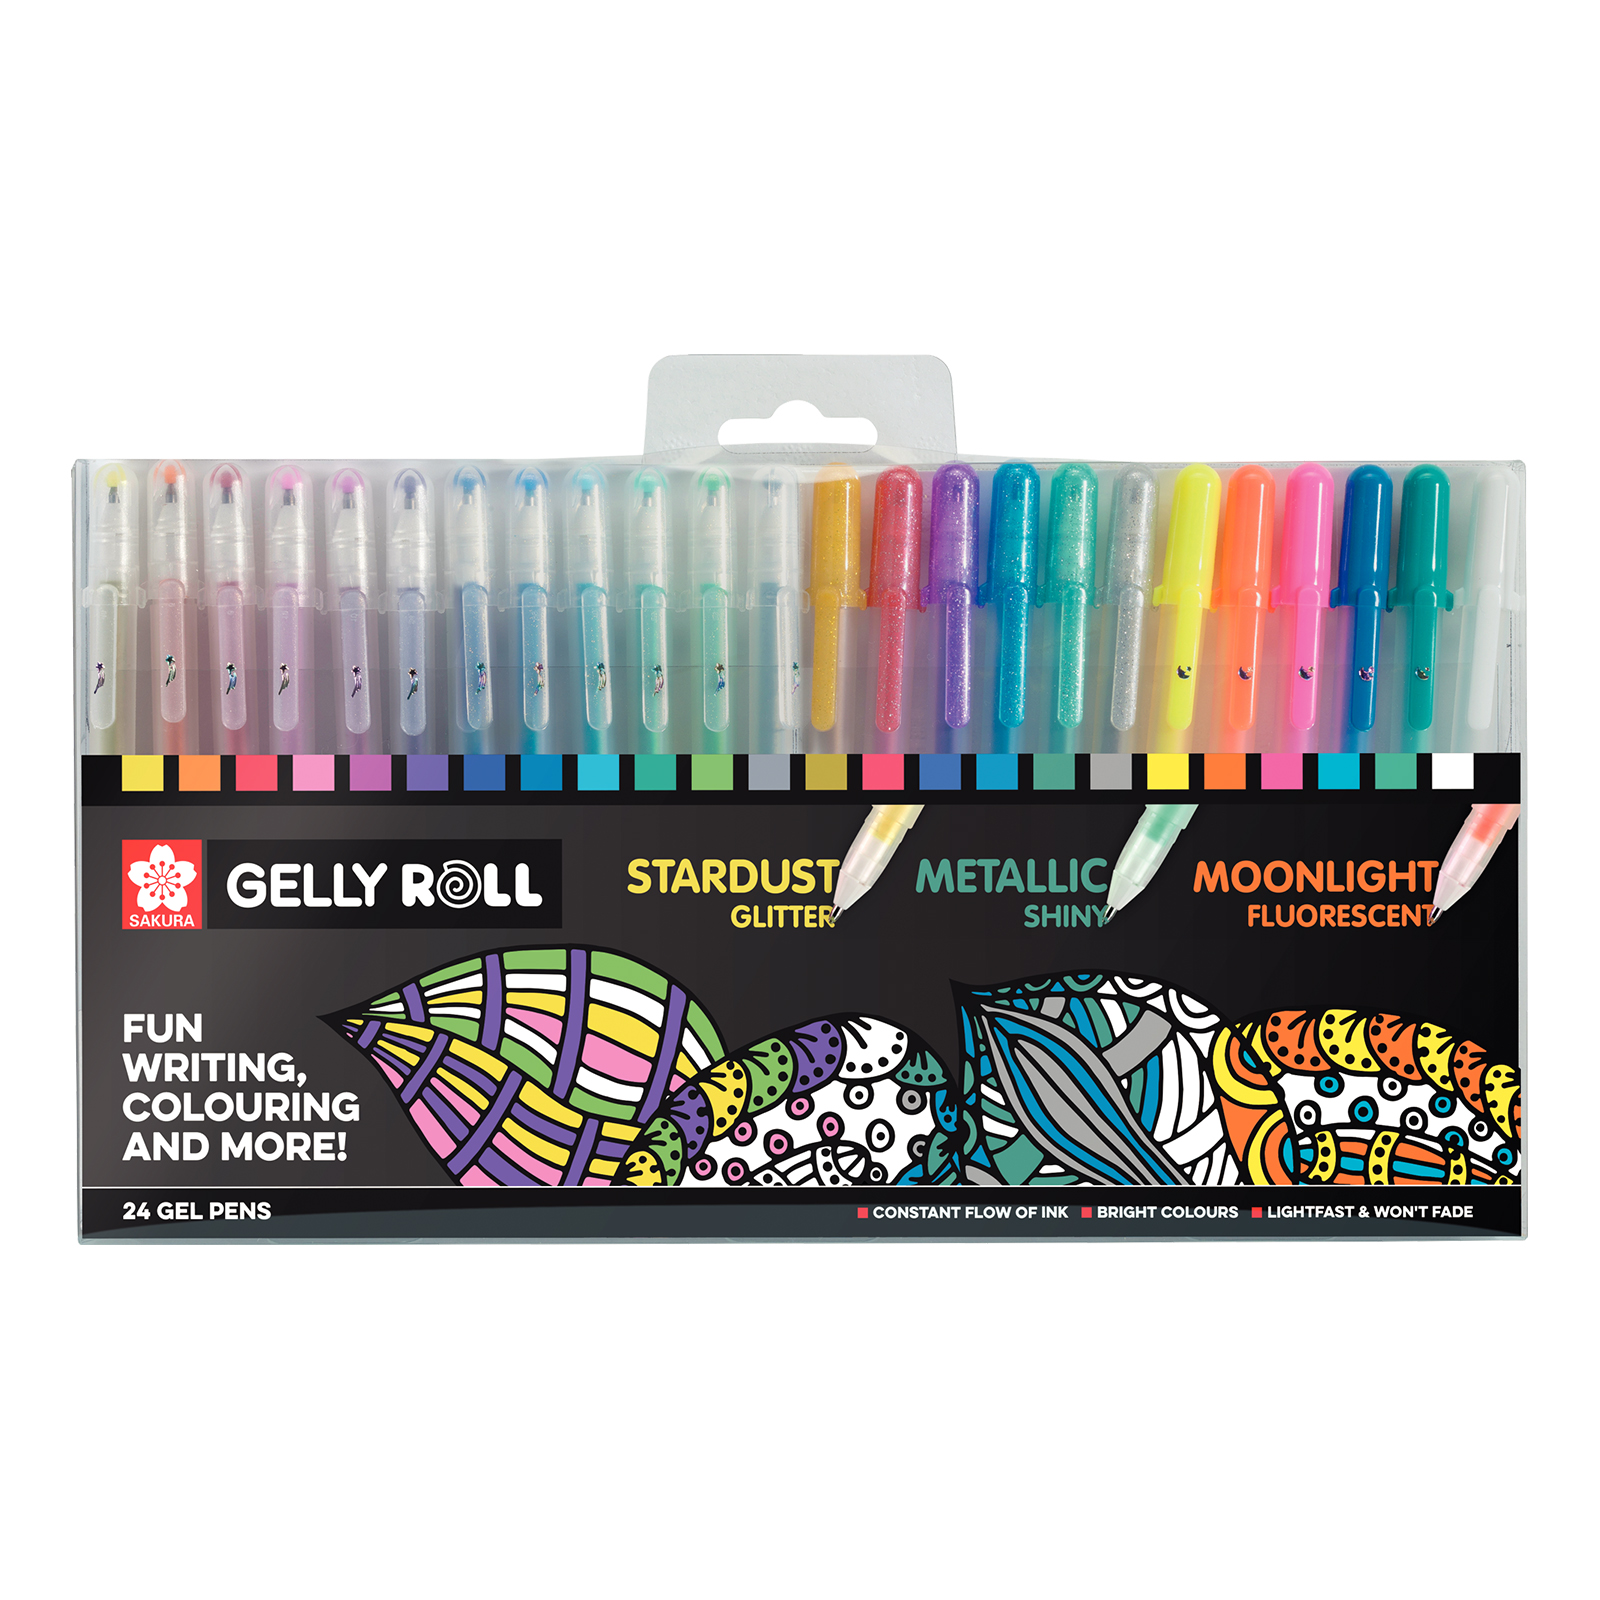 Sakura • Gelly roll gel pen Stardust glitter, Metallic shiny, Moonlight  fluorescent 24pieces